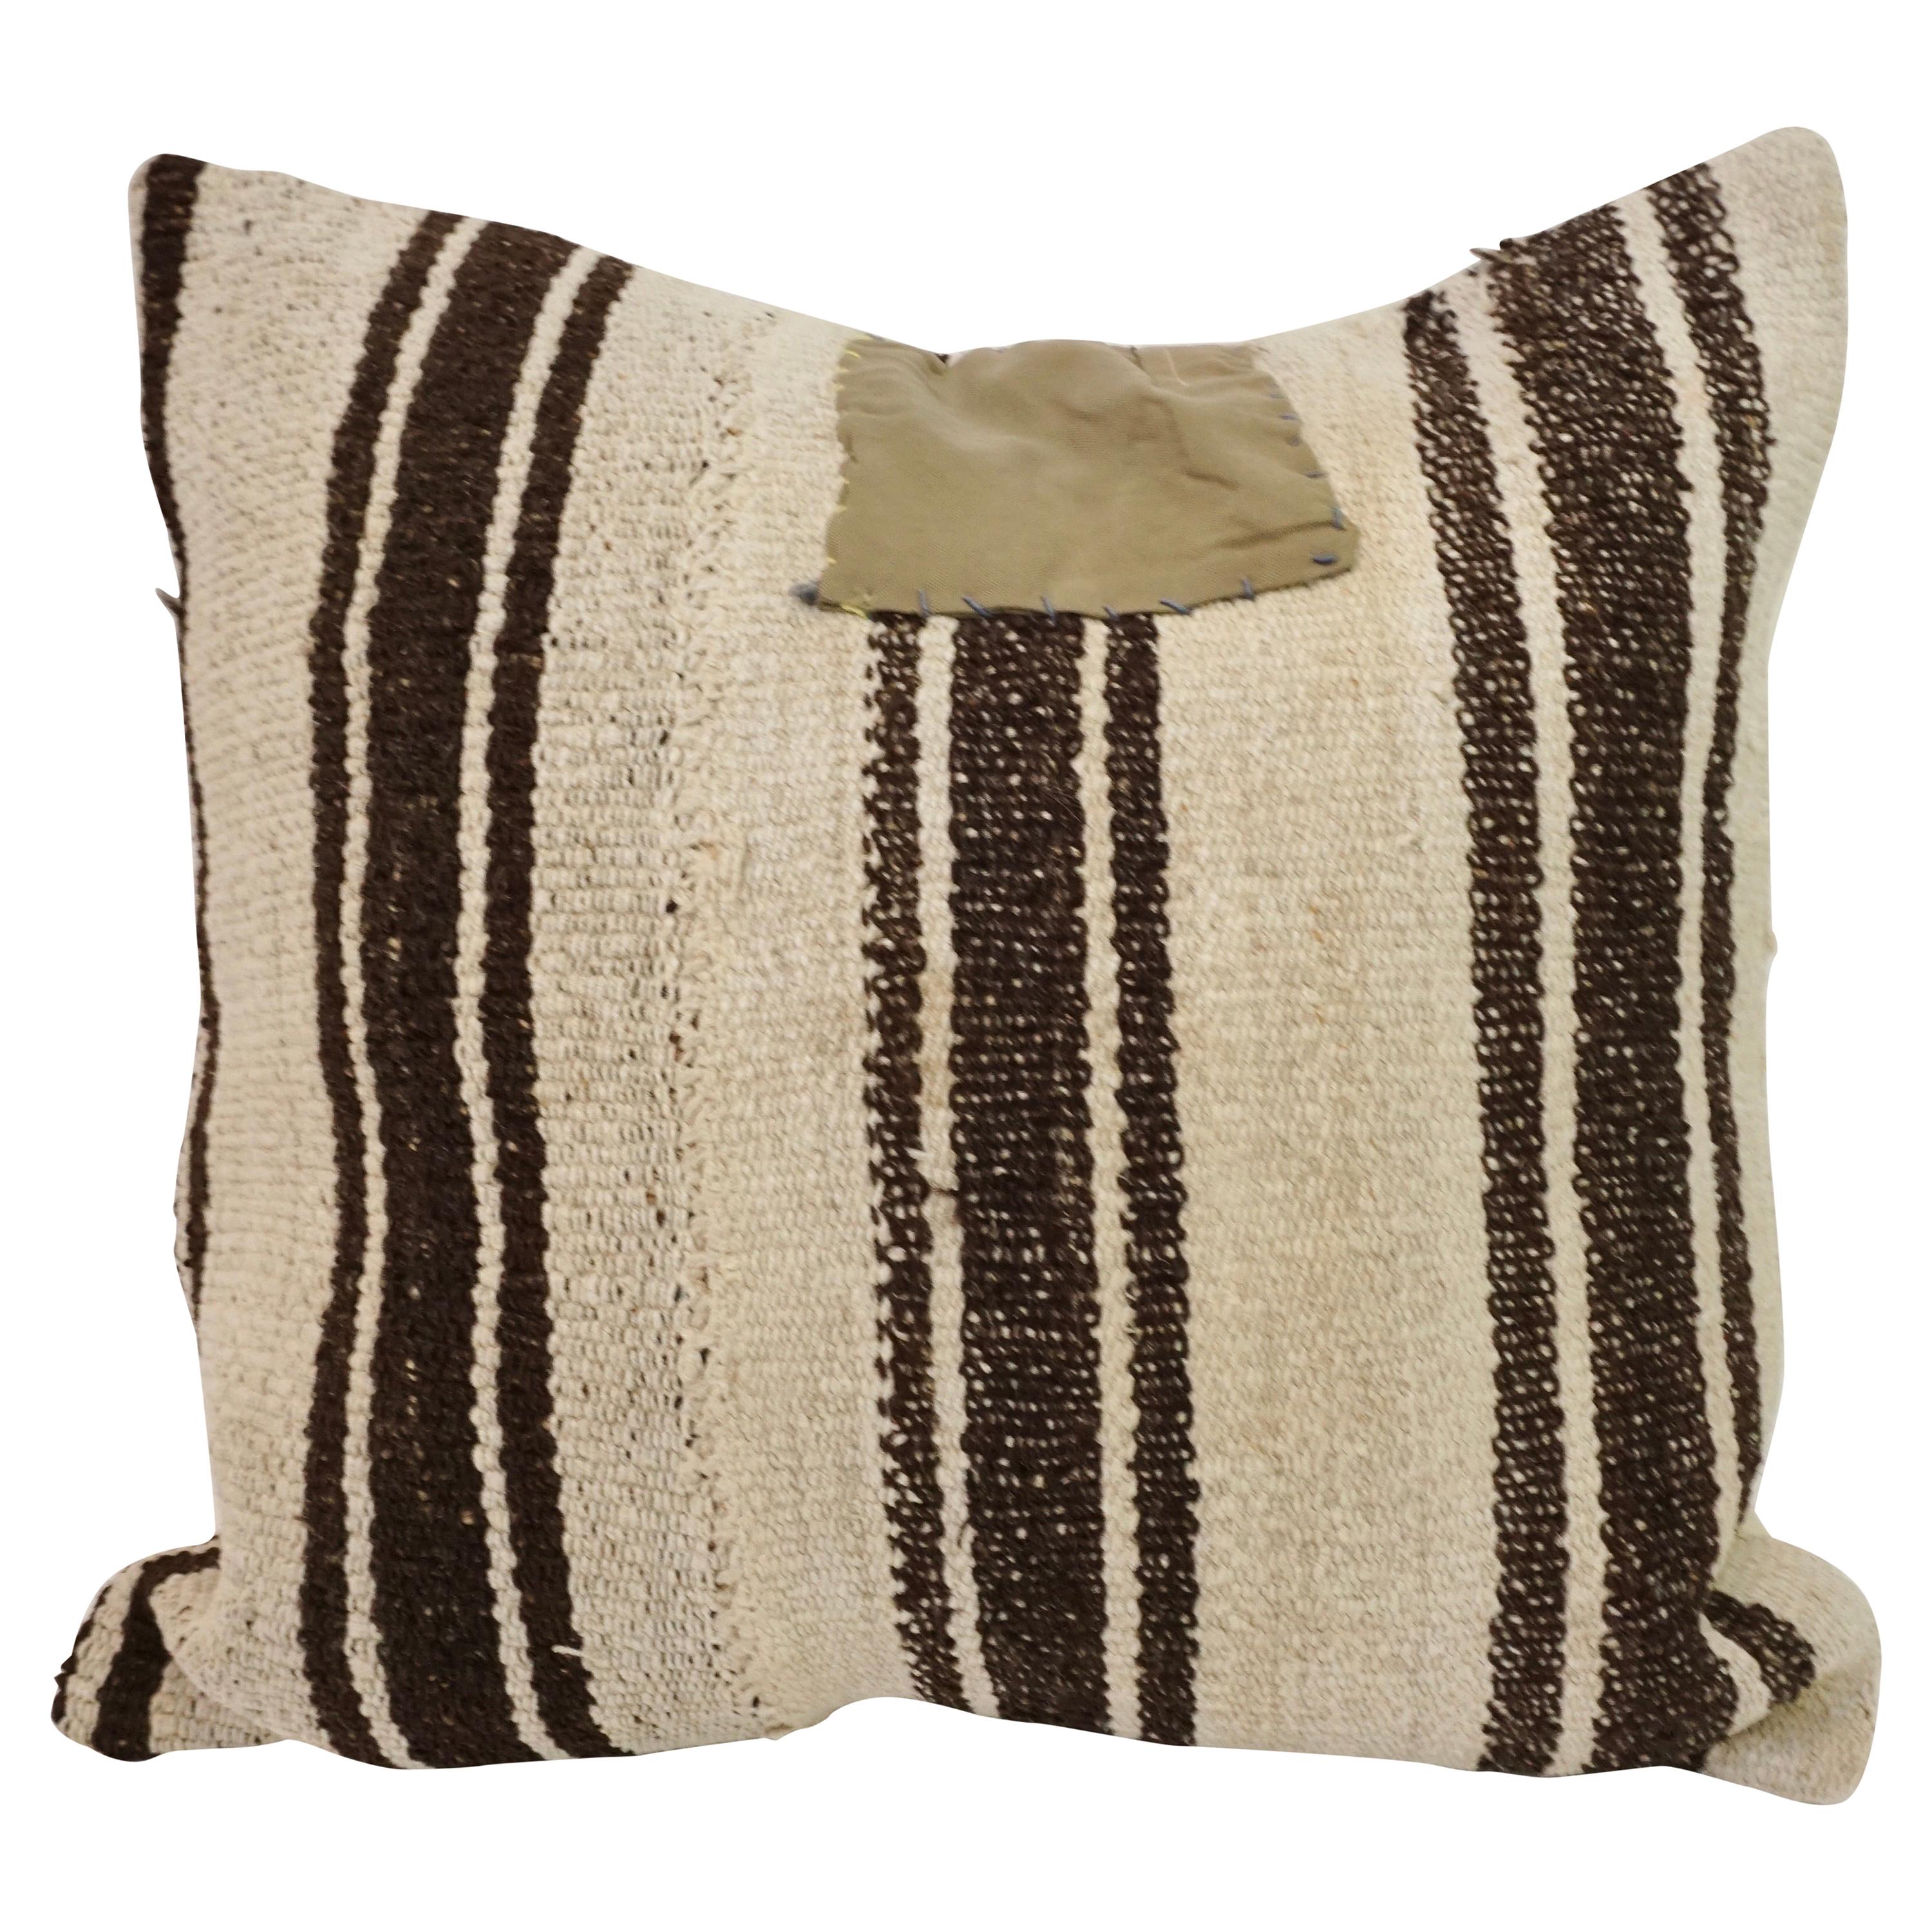 Decorative Pillow with Antique Textile Cover For Sale